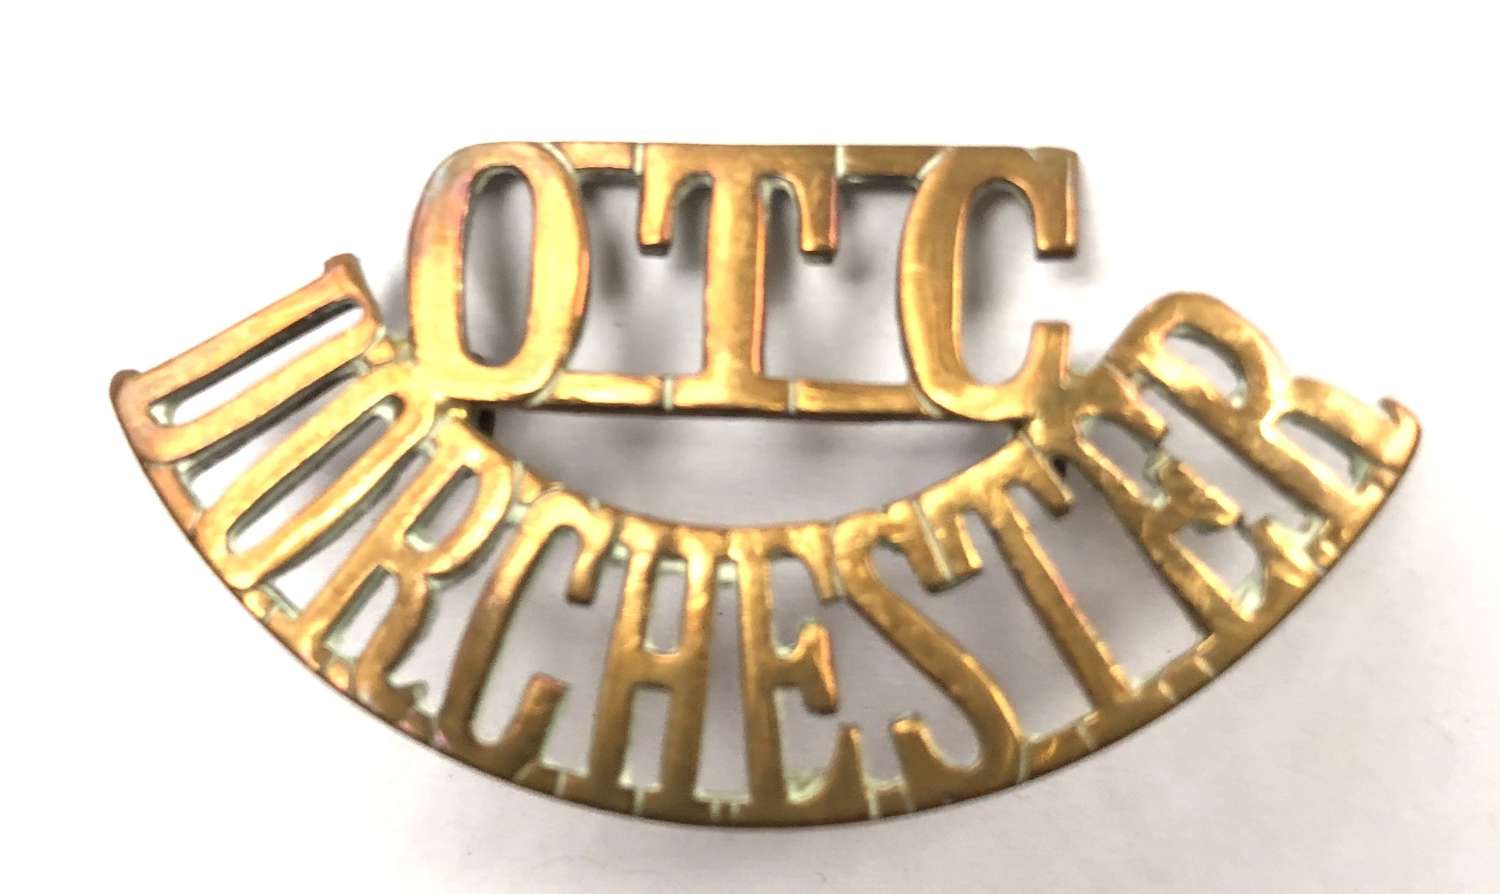 OTC / DORCHESTER shoulder title circa 1908-40